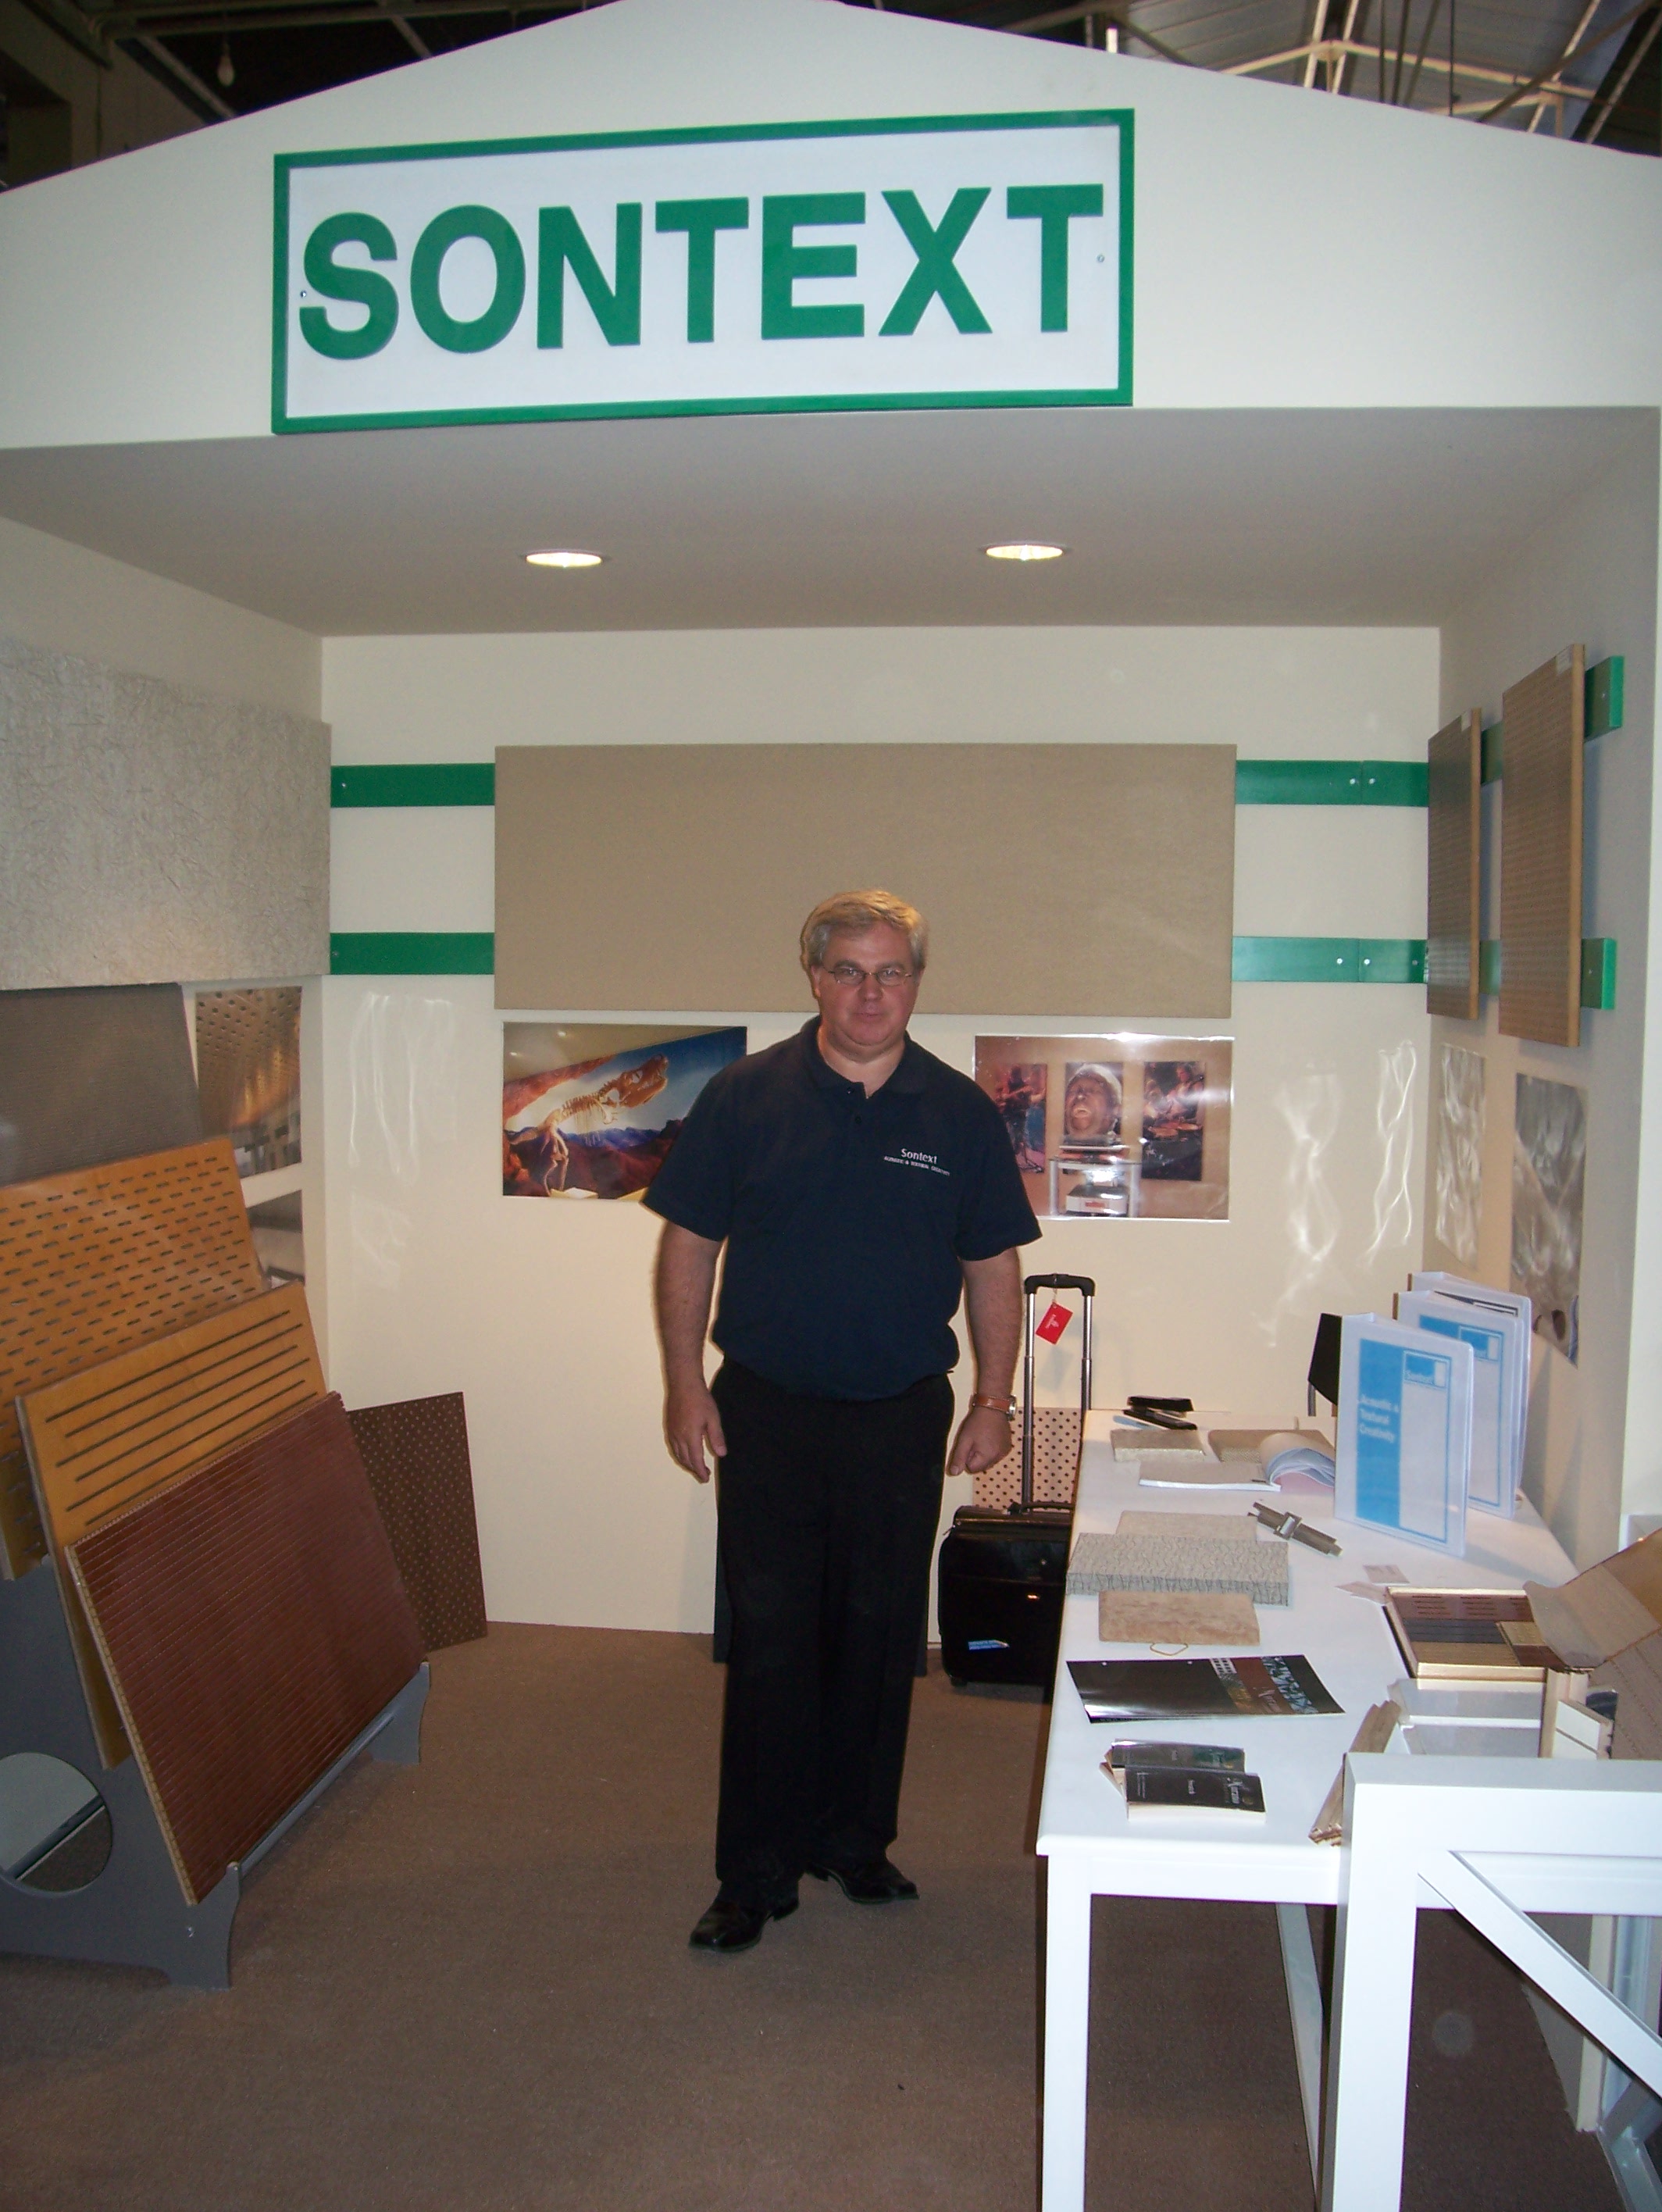 Sontext display in Kuwait